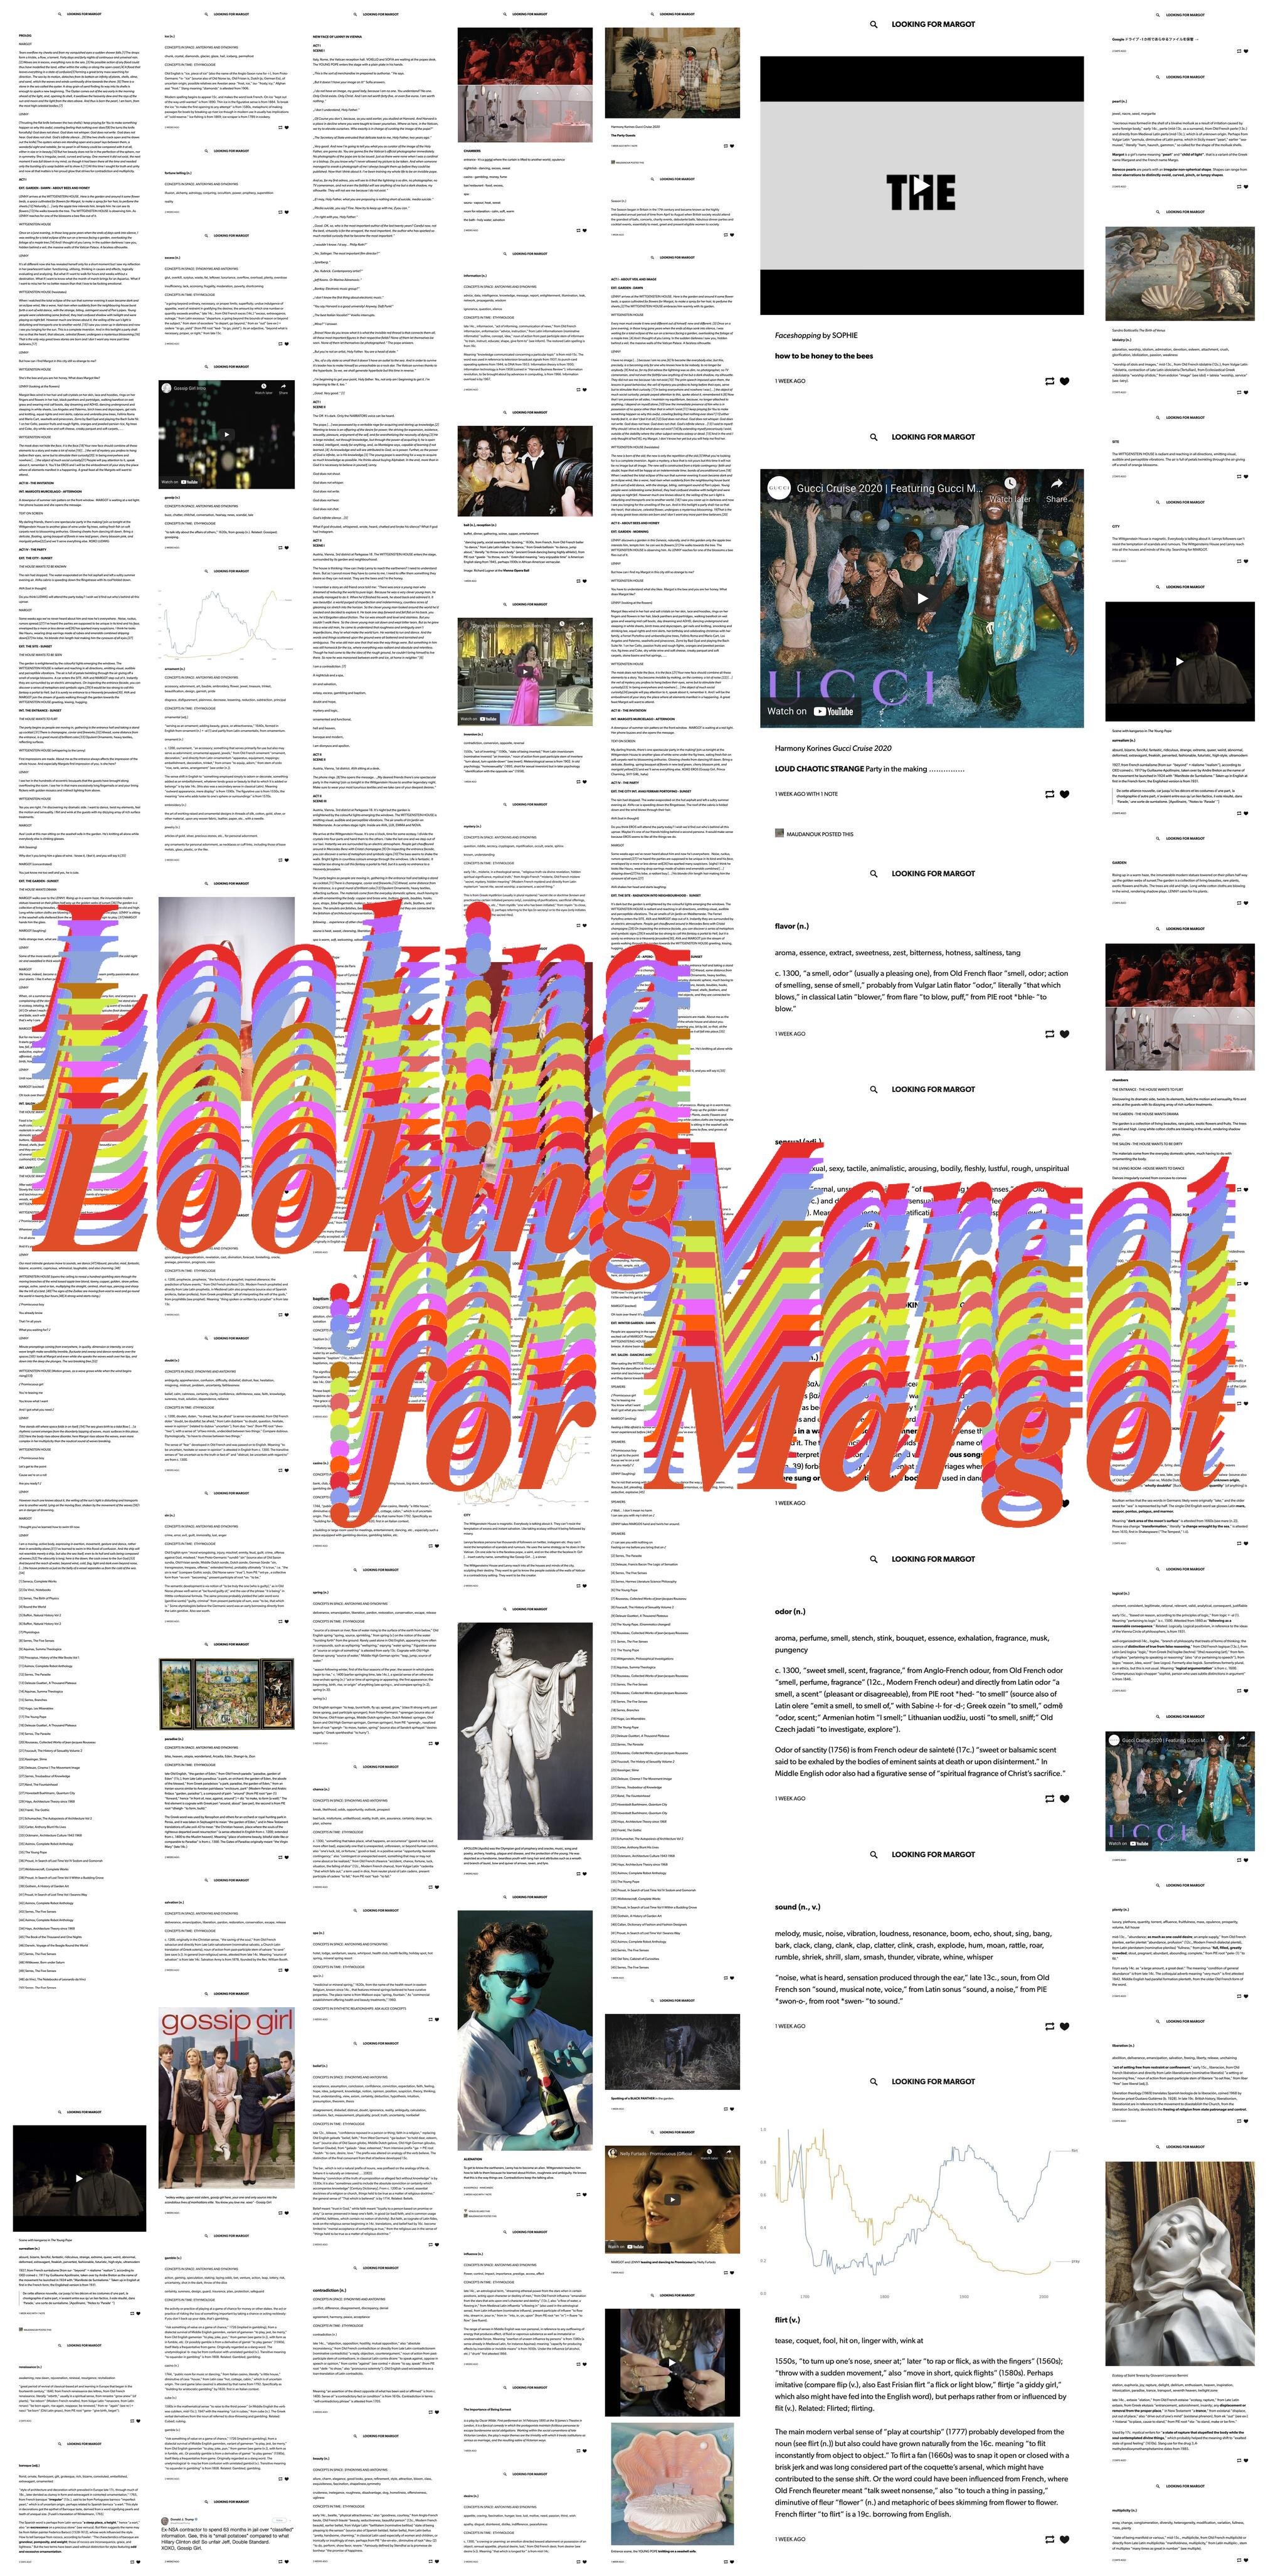 Looking for Margot.jpg